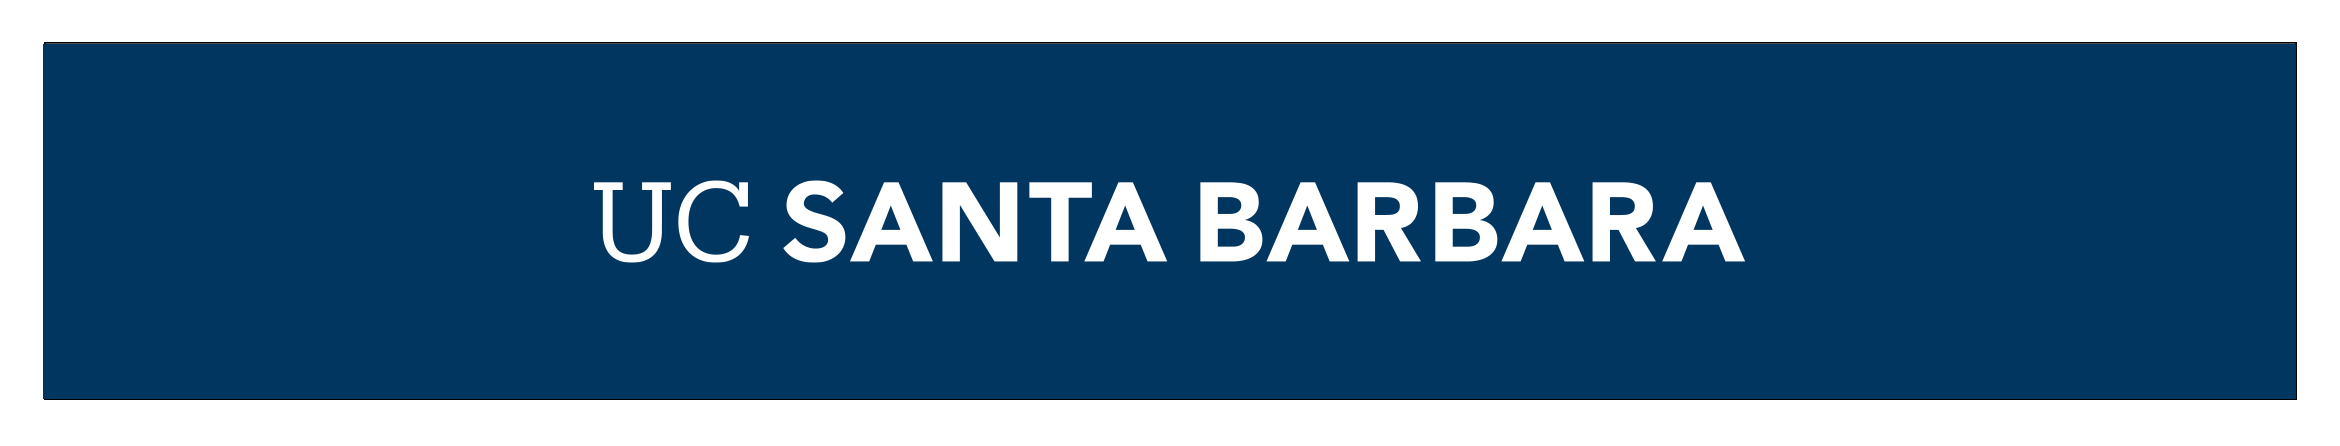 UC Santa Barbara reversed wordmark